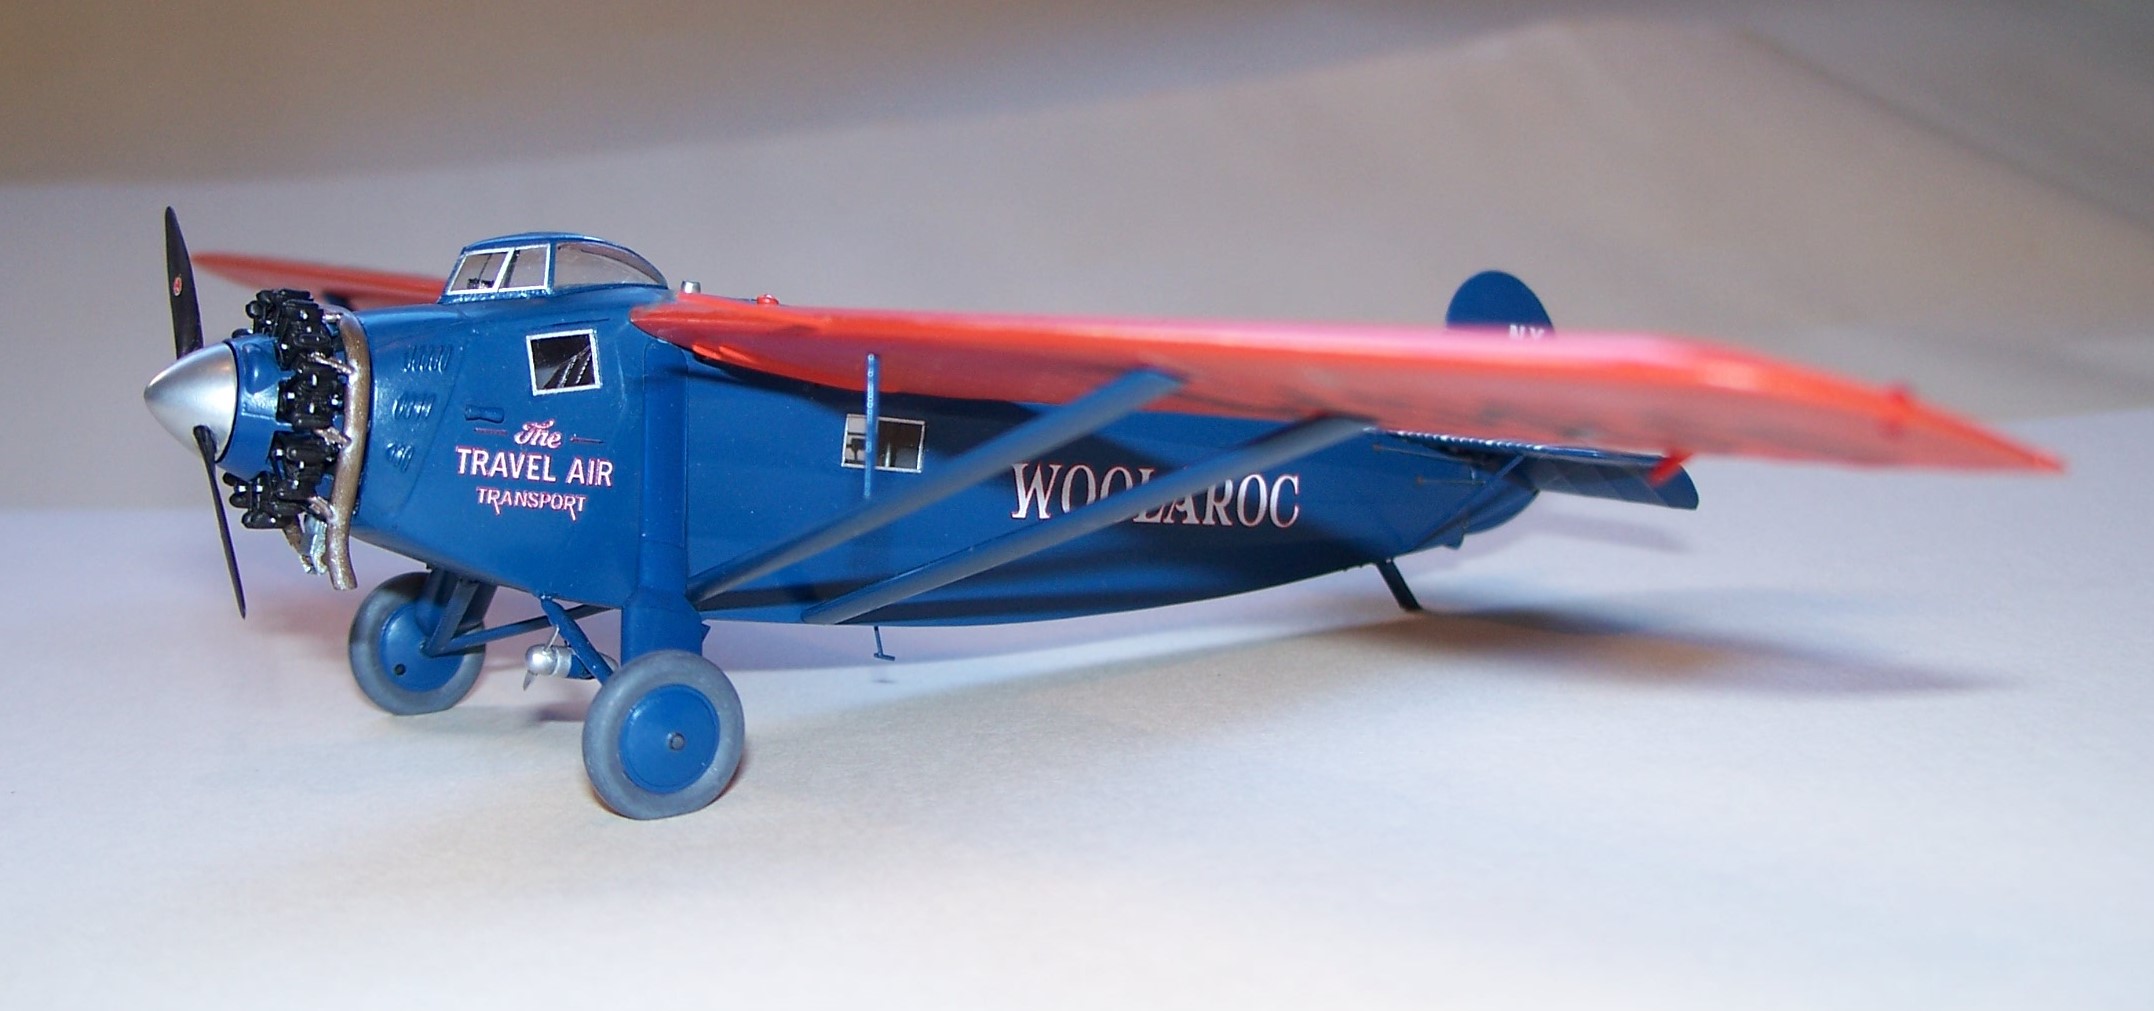 Travel Air 5000 Woolaroc model_1 (2).jpg  by Rogerhold